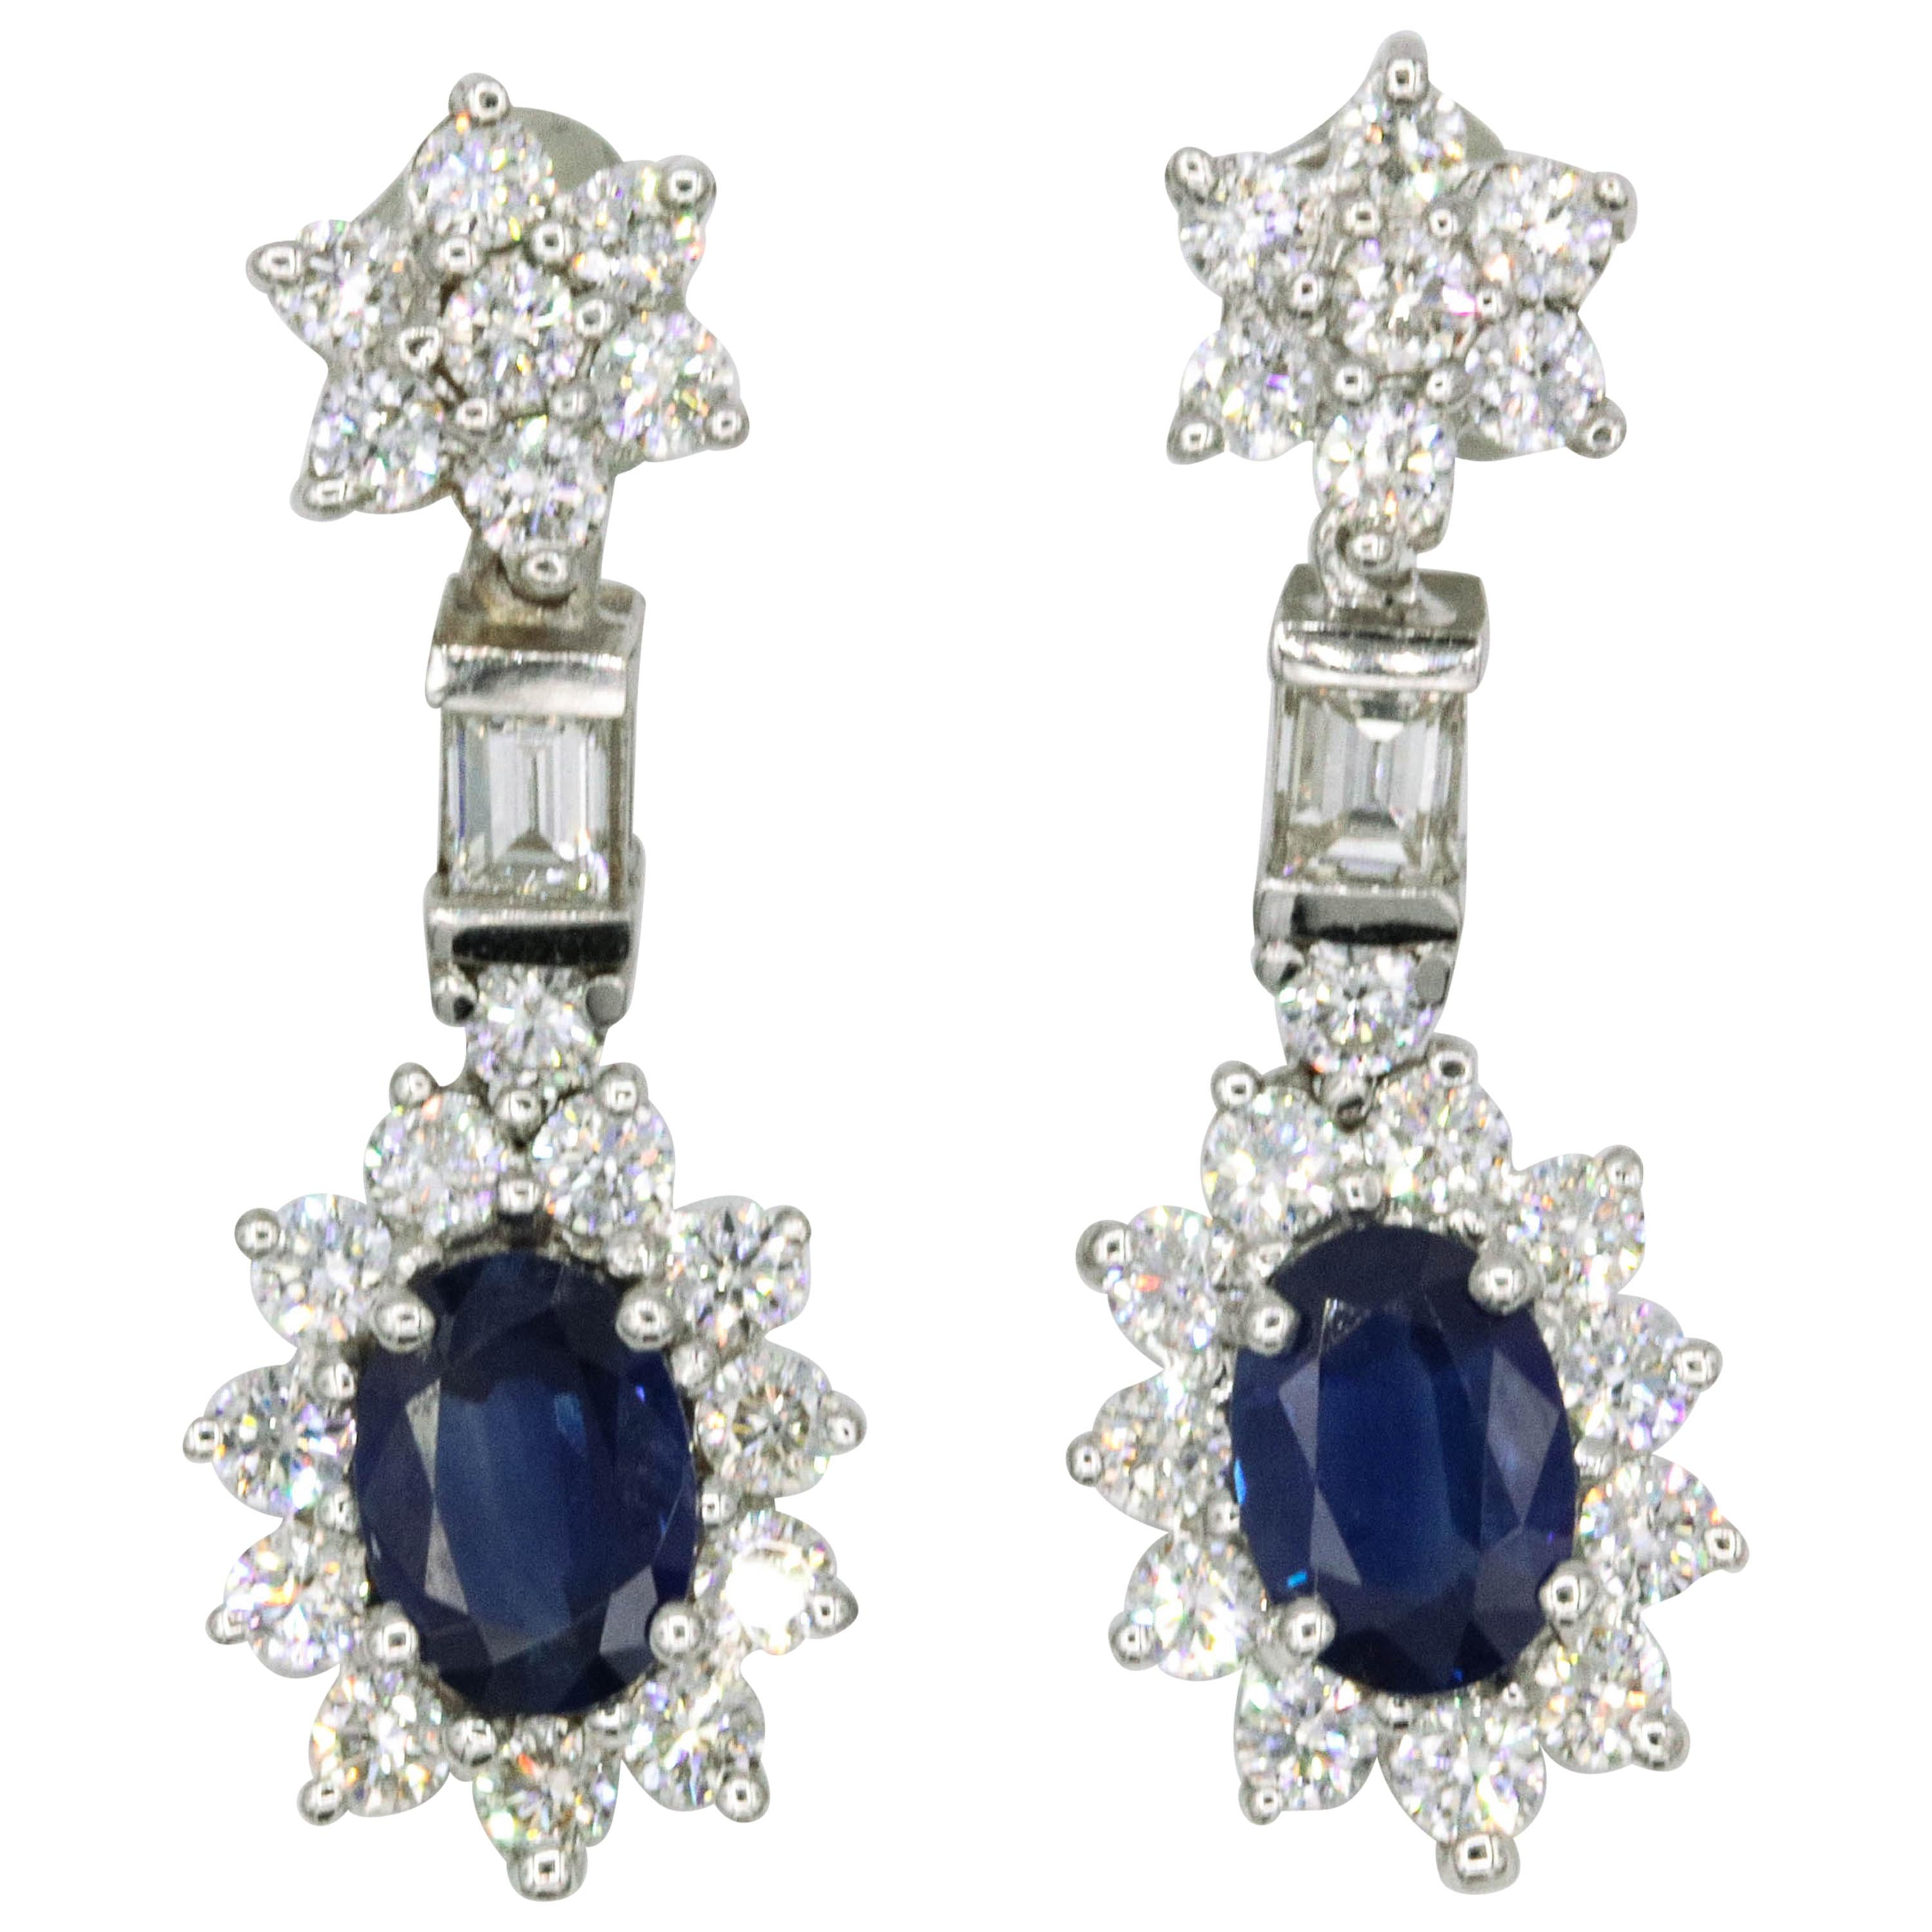 Sapphire Diamond Cluster Drop Earrings 3.63 Carat 18 Karat White Gold